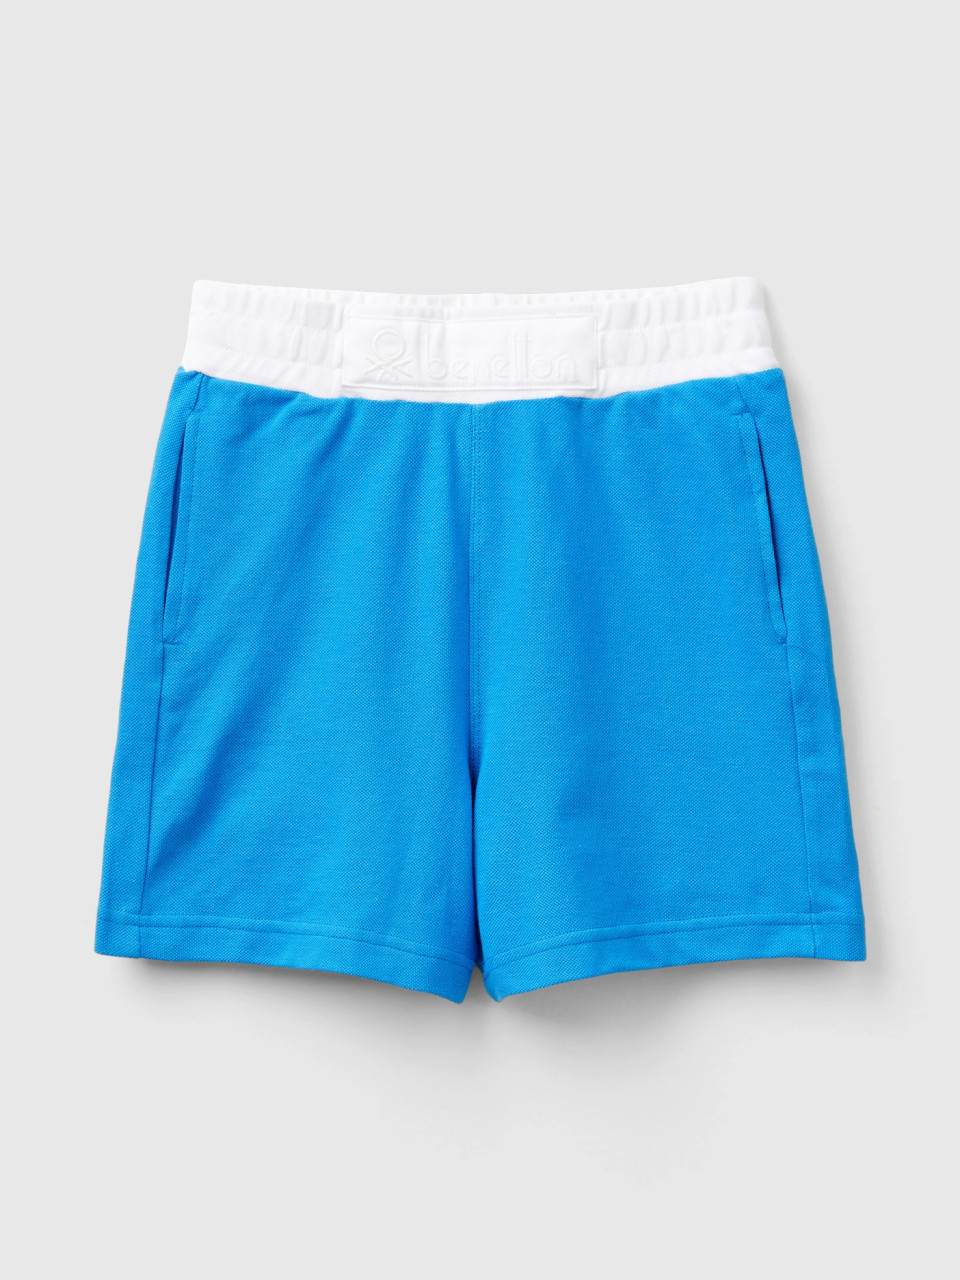 Benetton, Organic Cotton Shorts, Blue, Kids